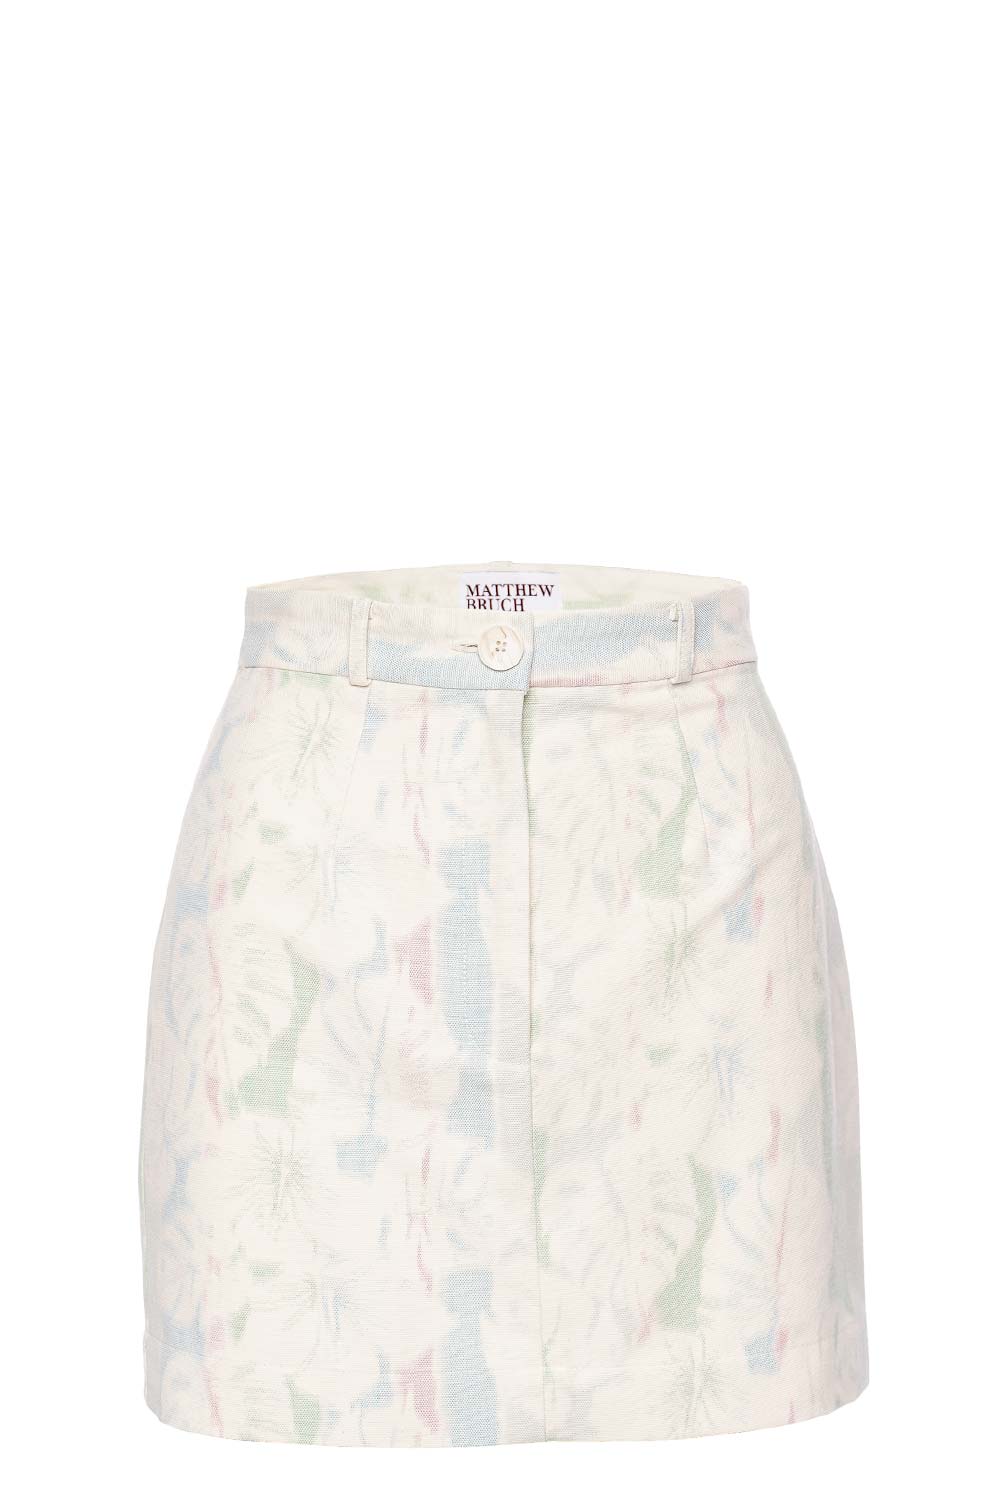 Matthew Bruch Tropical Printed Denim Mini Skirt